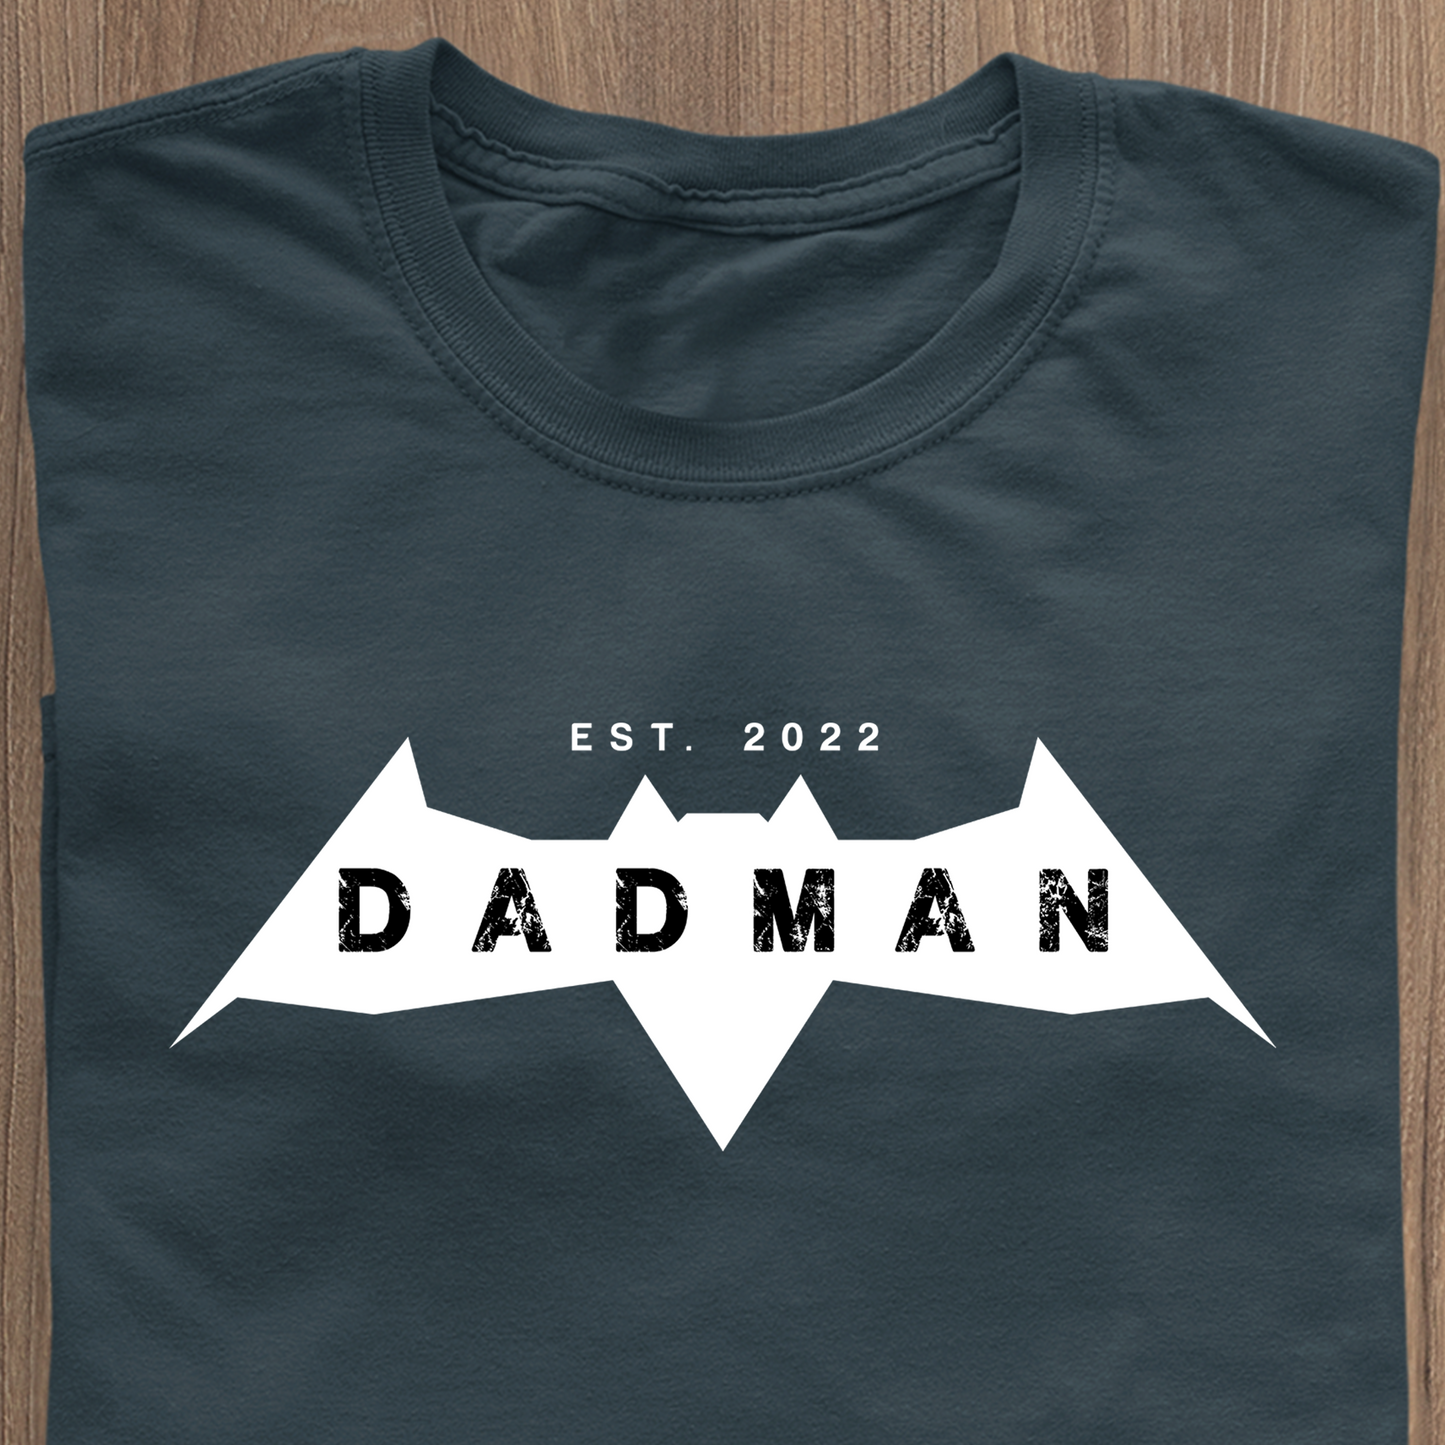 Dadman T-Shirt - Date Personnalisée